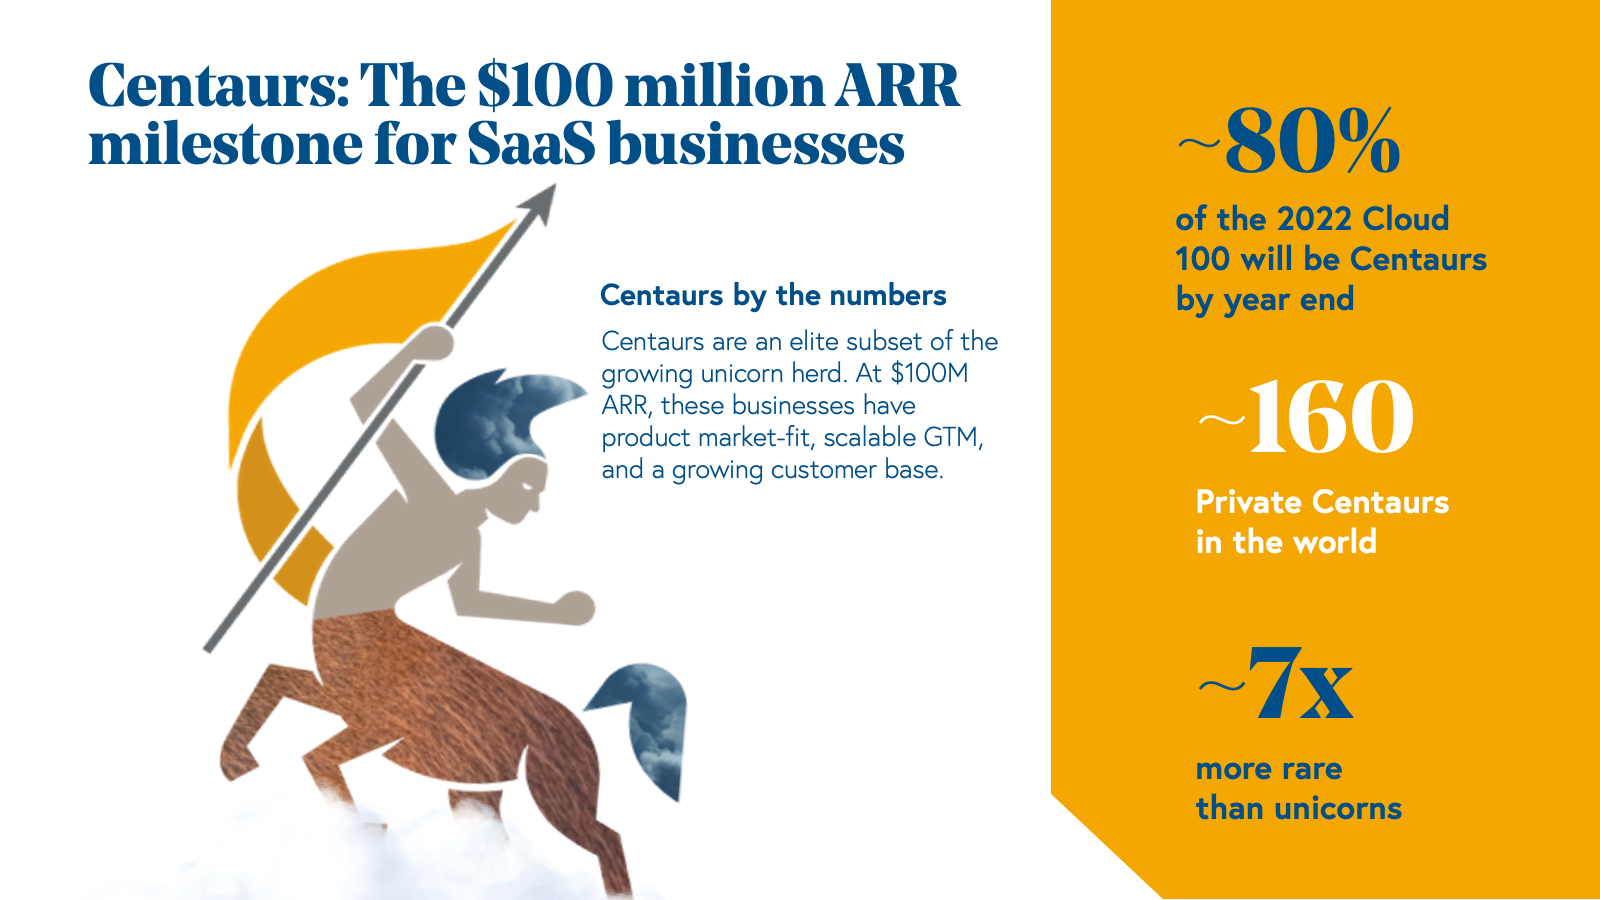 Centaurs: The $100 million ARR milestone for SaaS businesses